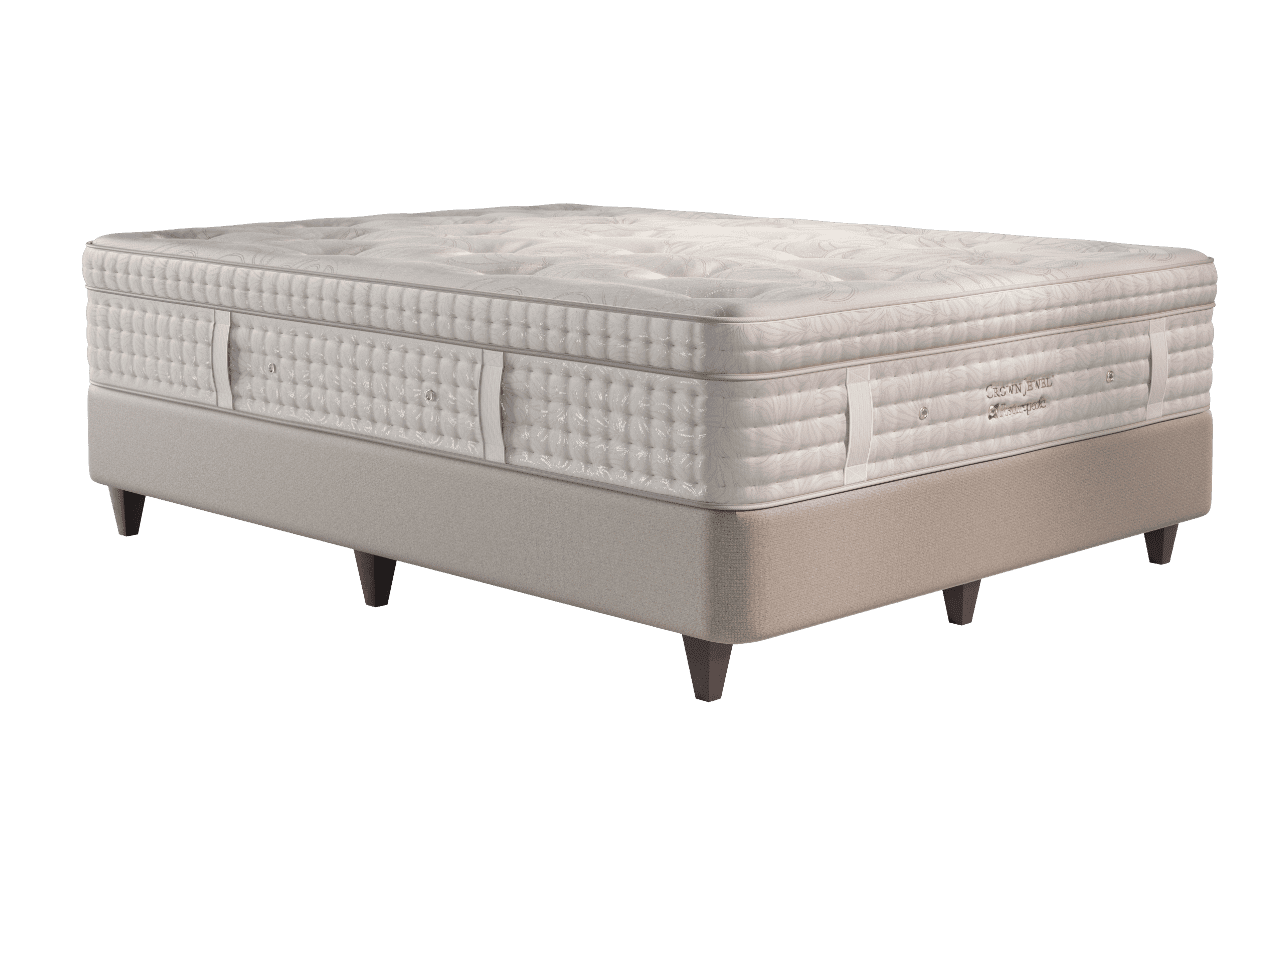 sealy posturepedic crown jewel luxury firm crib mattress